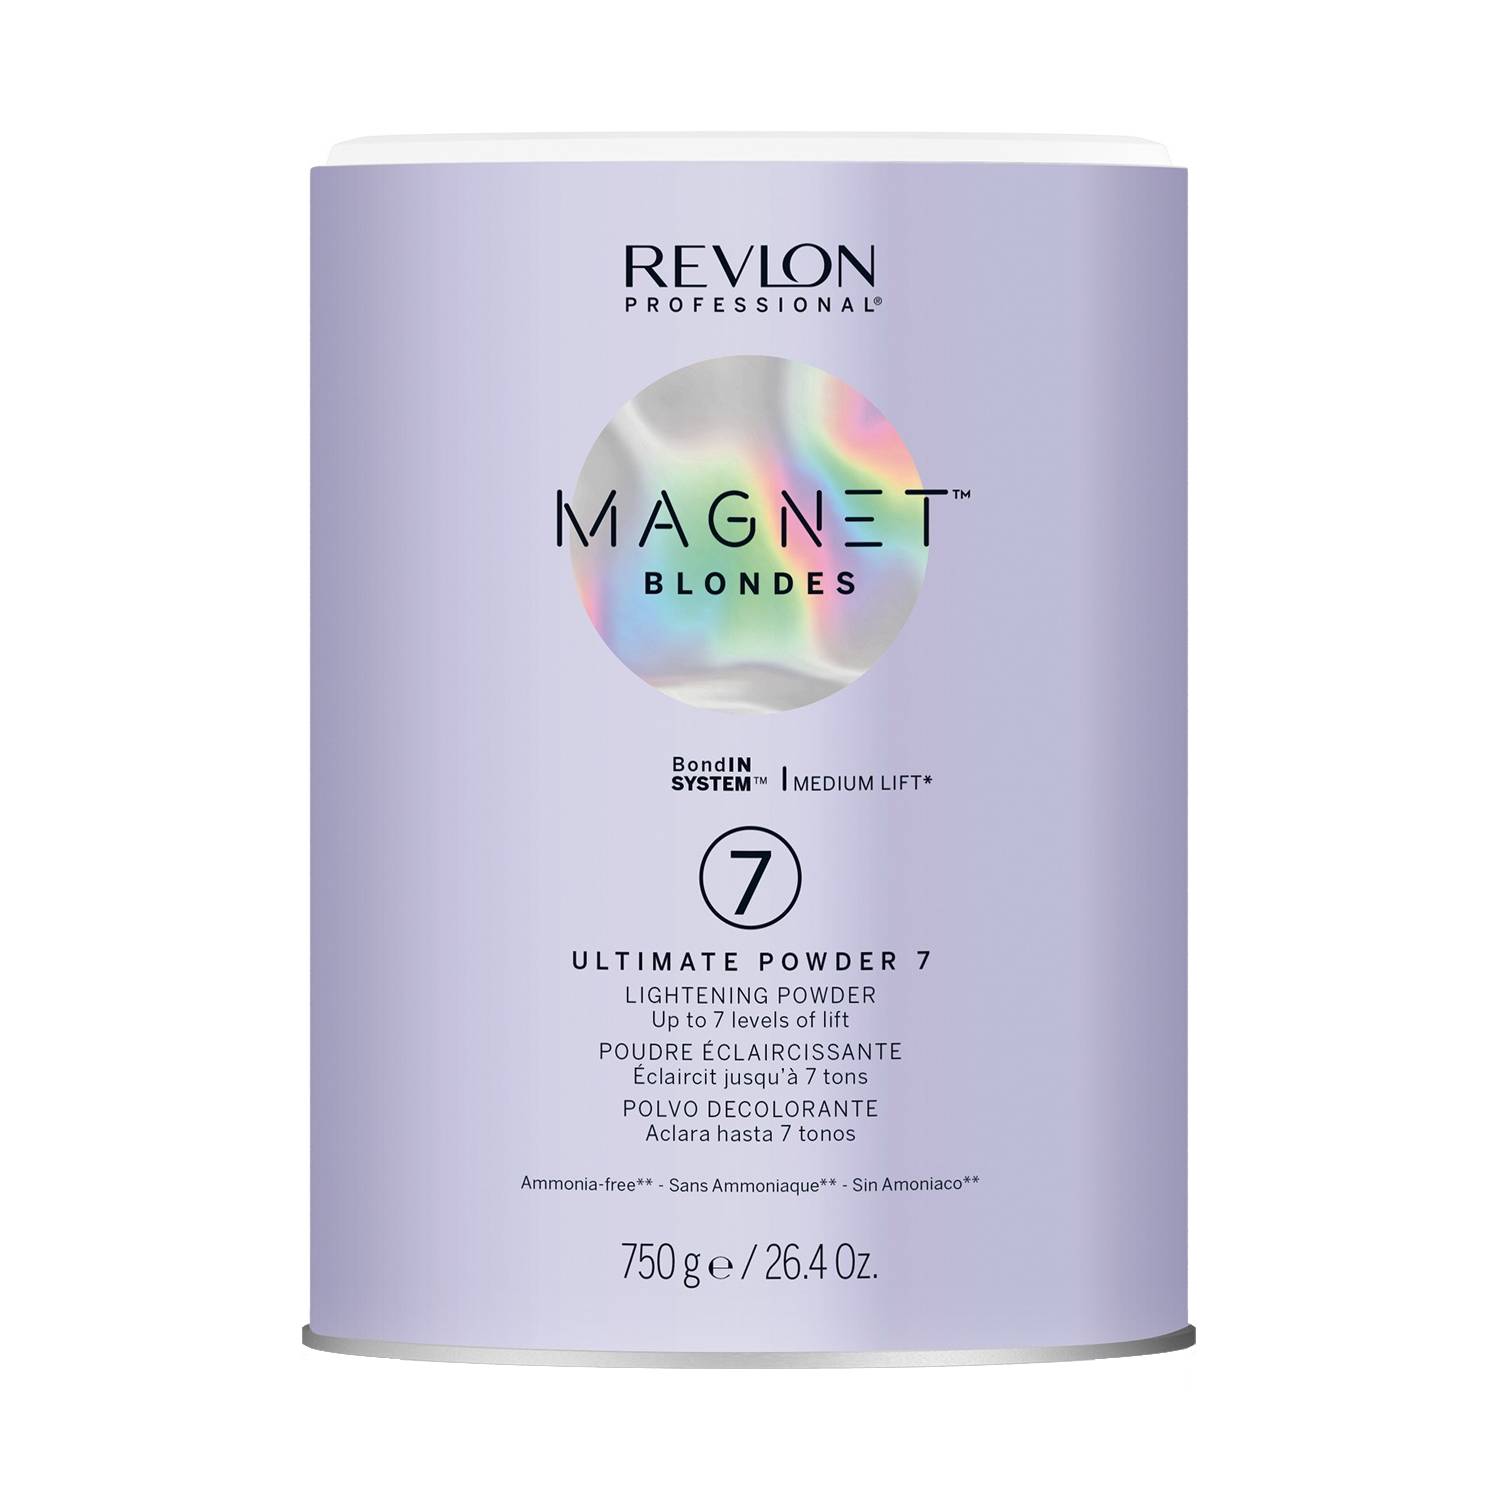 Revlon Professional Нелетучая безаммиачная осветляющая пудра 7 Ultimate Powder Lightening Powder, 750 г (Revlon Professional, Magnet Blondes)